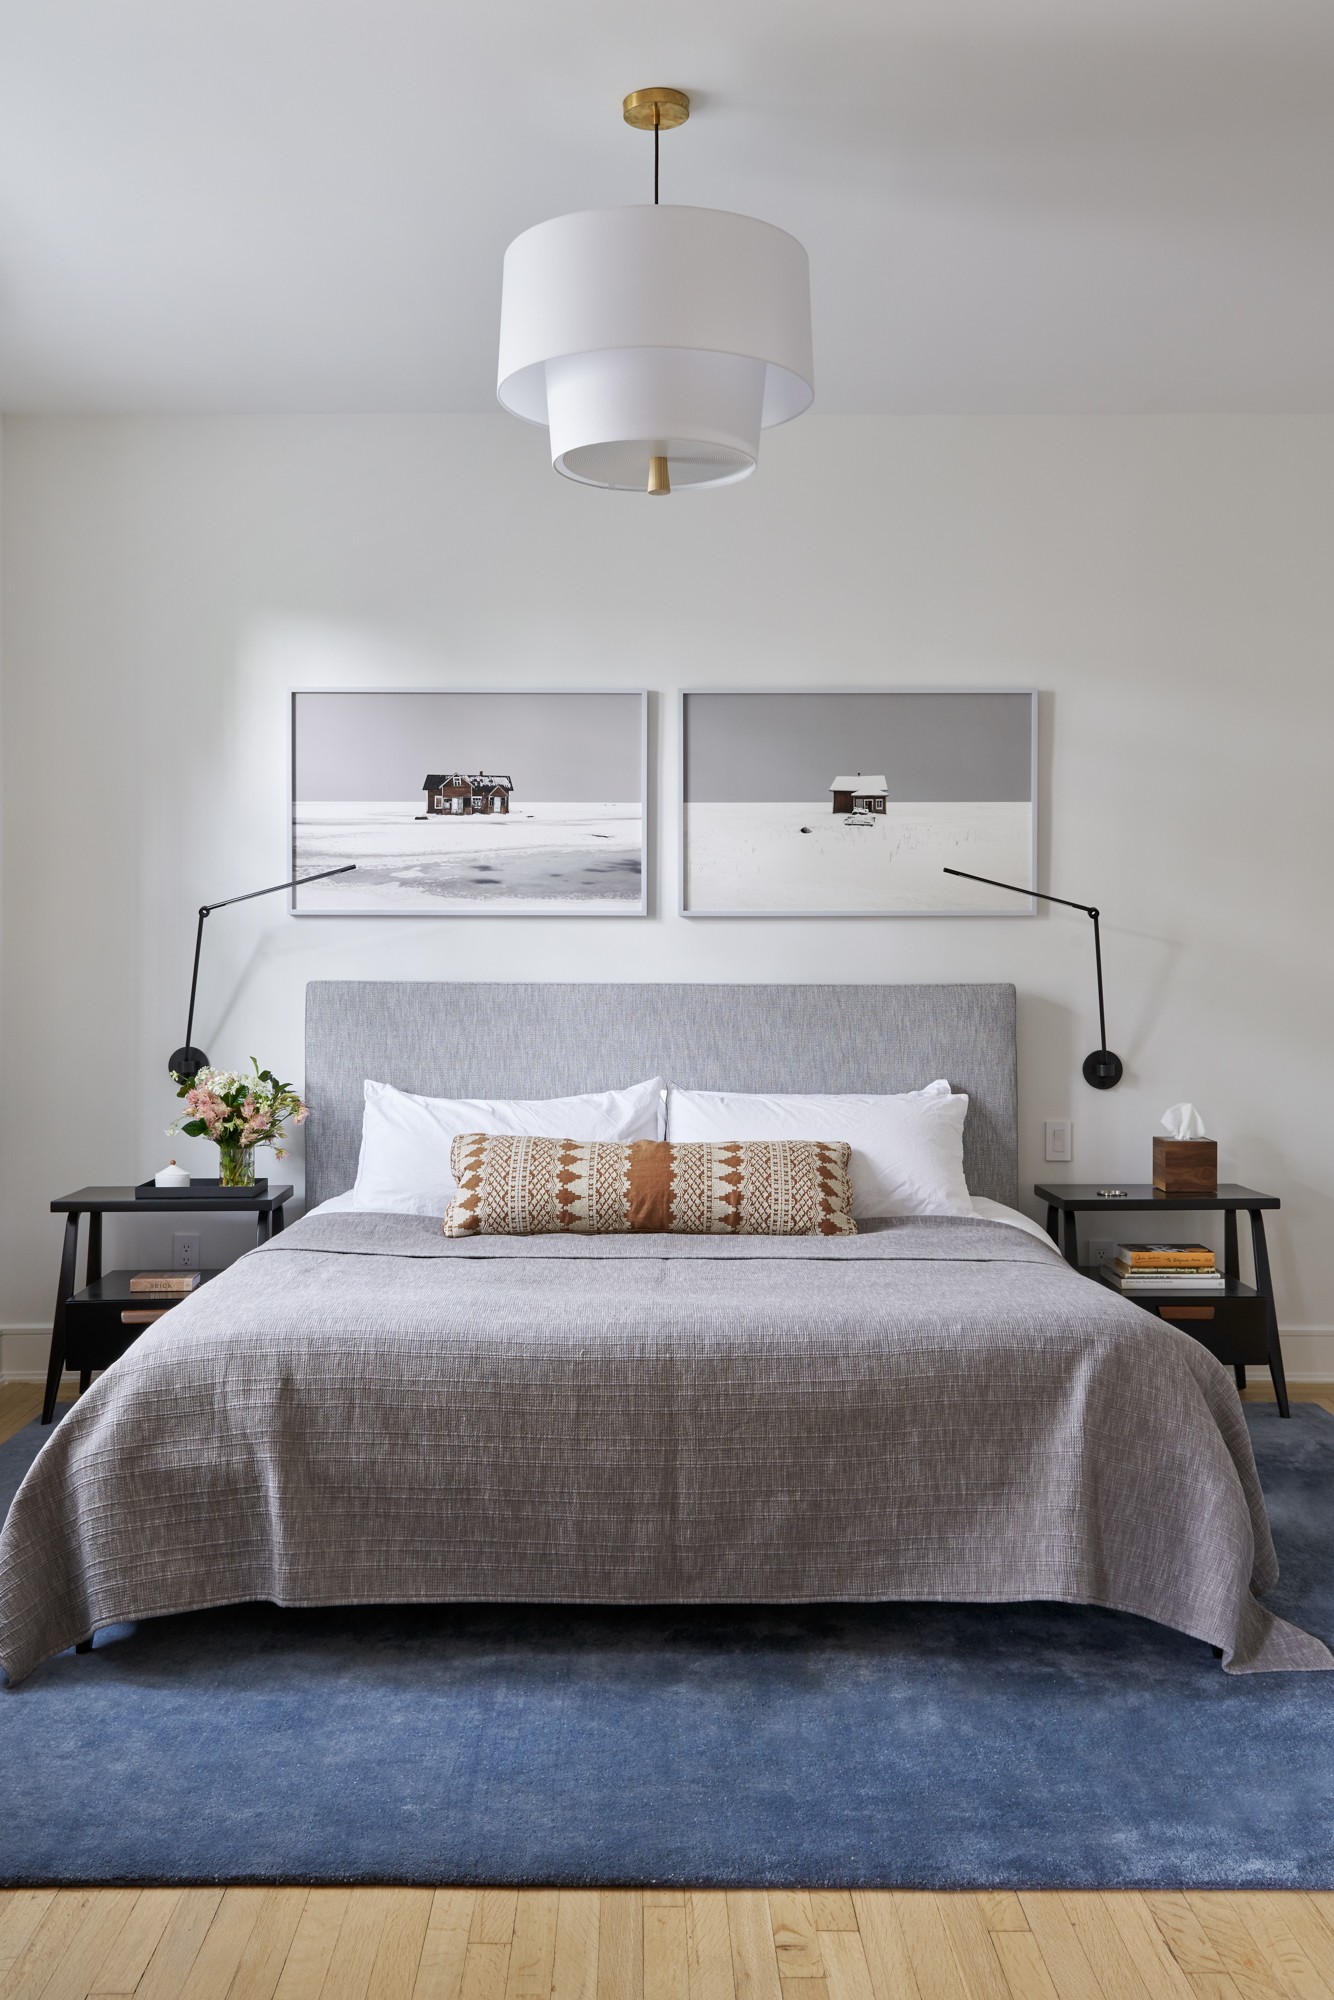 Lewis Birks - THIN Task Lamp Wall Mount - Photo by Seth Caplan, Modern Bedroom Design